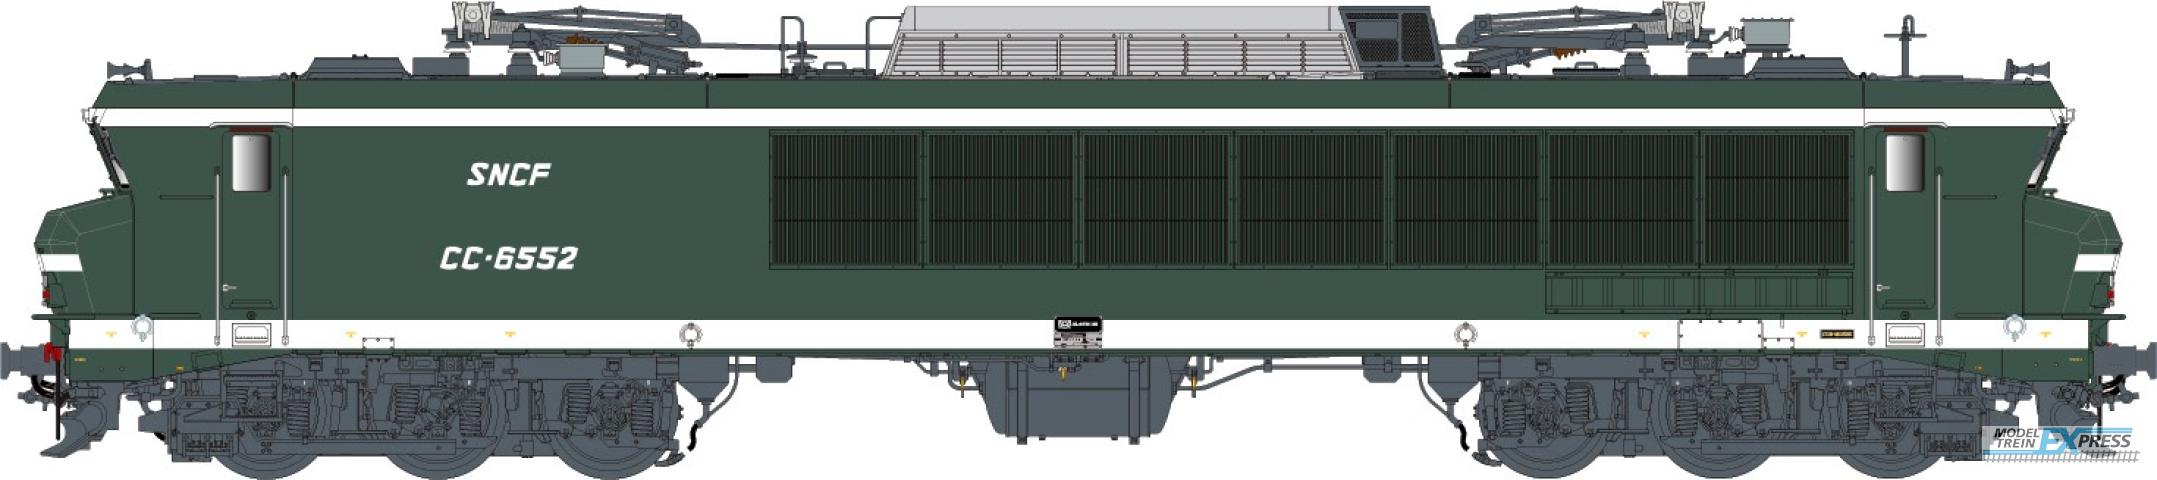 LS Models 10315 CC 6552, Maurienne-livrei, gemoderniseerde buffers, depot Lyon-Mouche / Ep. IV / SNCF / HO / DC / 1 P.